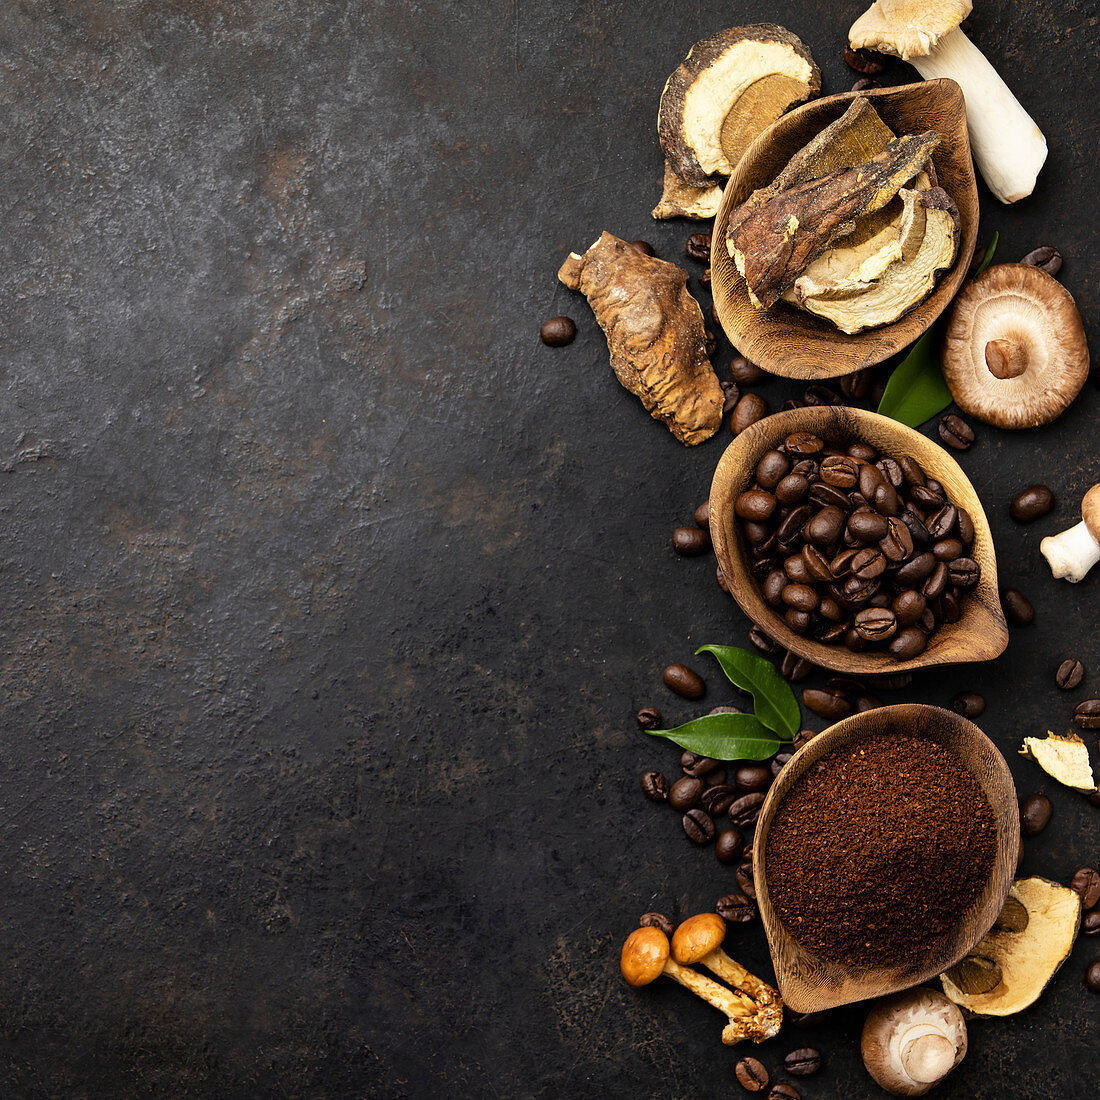 Ingredients for Chaga Mushroom Coffee